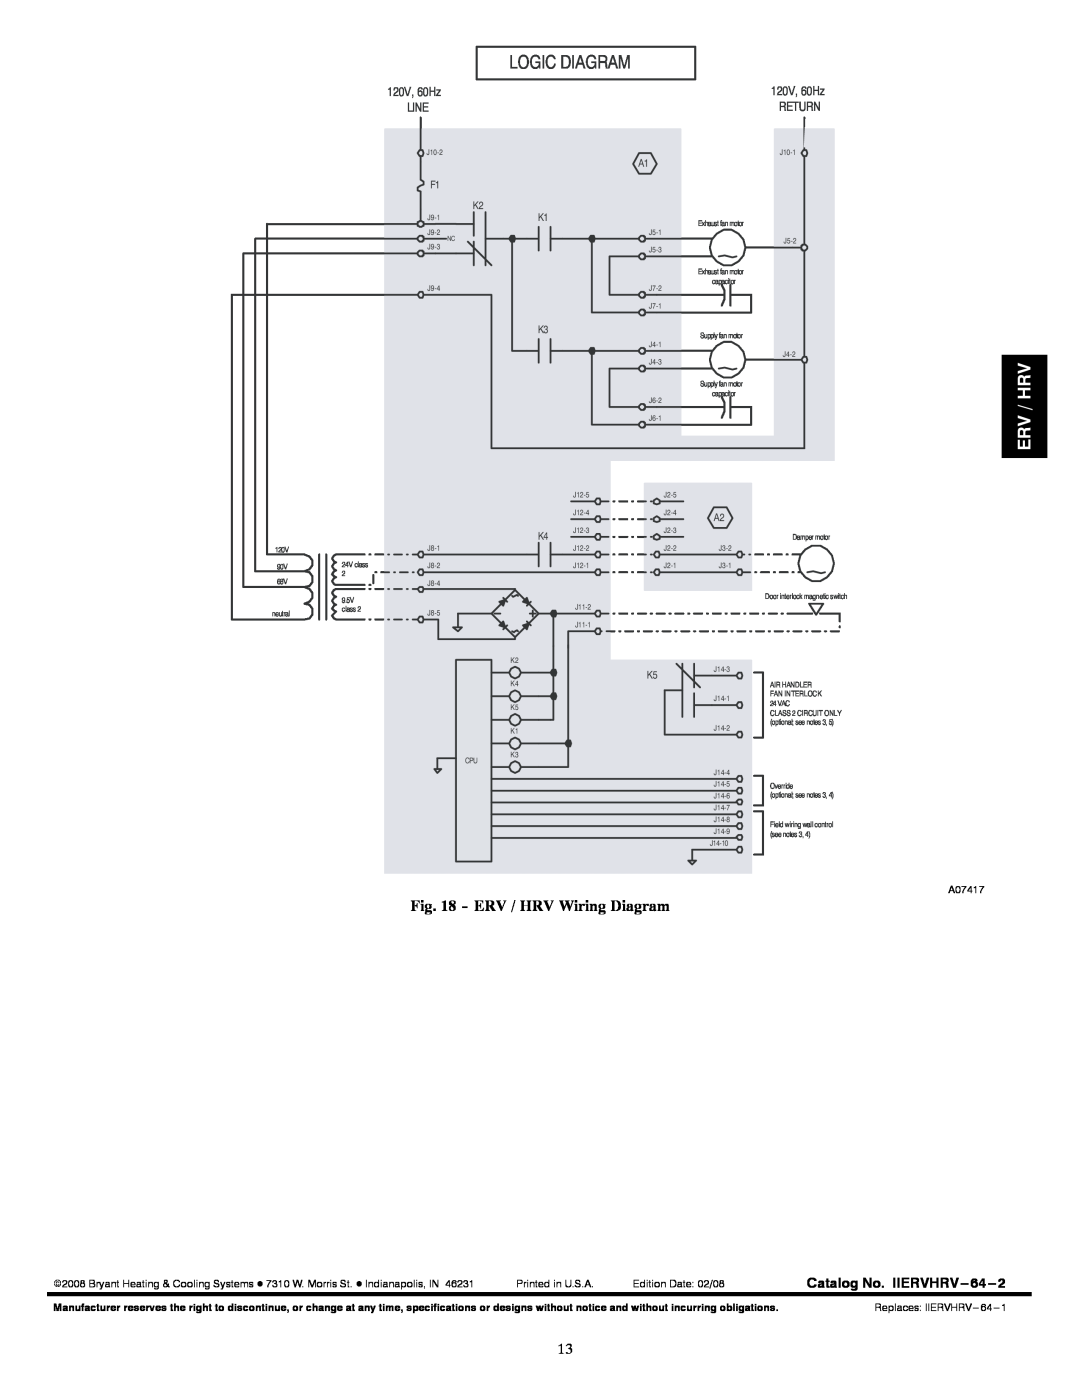 Bryant ERVBBSVA1100 ERV / HRV Wiring Diagram, Logic Diagram, Erv / Hrv, 120V, 60Hz, Line, Return, A07417, Printed in U.S.A 